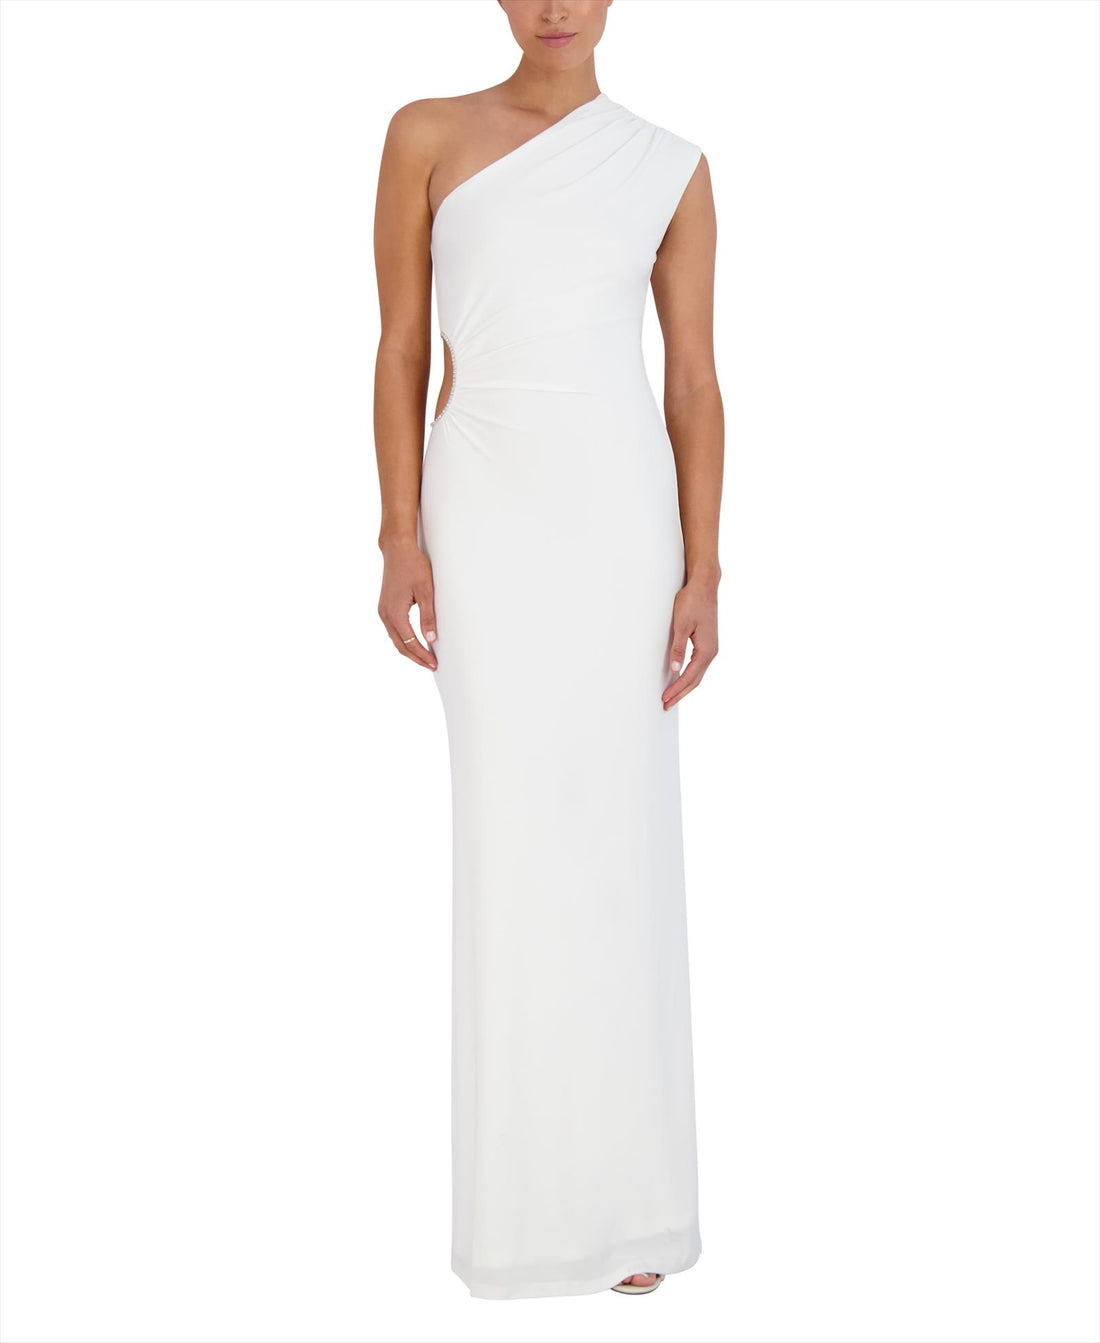 white-assymmetric-neck-long-dress-with-side-slit_mxx1d32_off-white_01